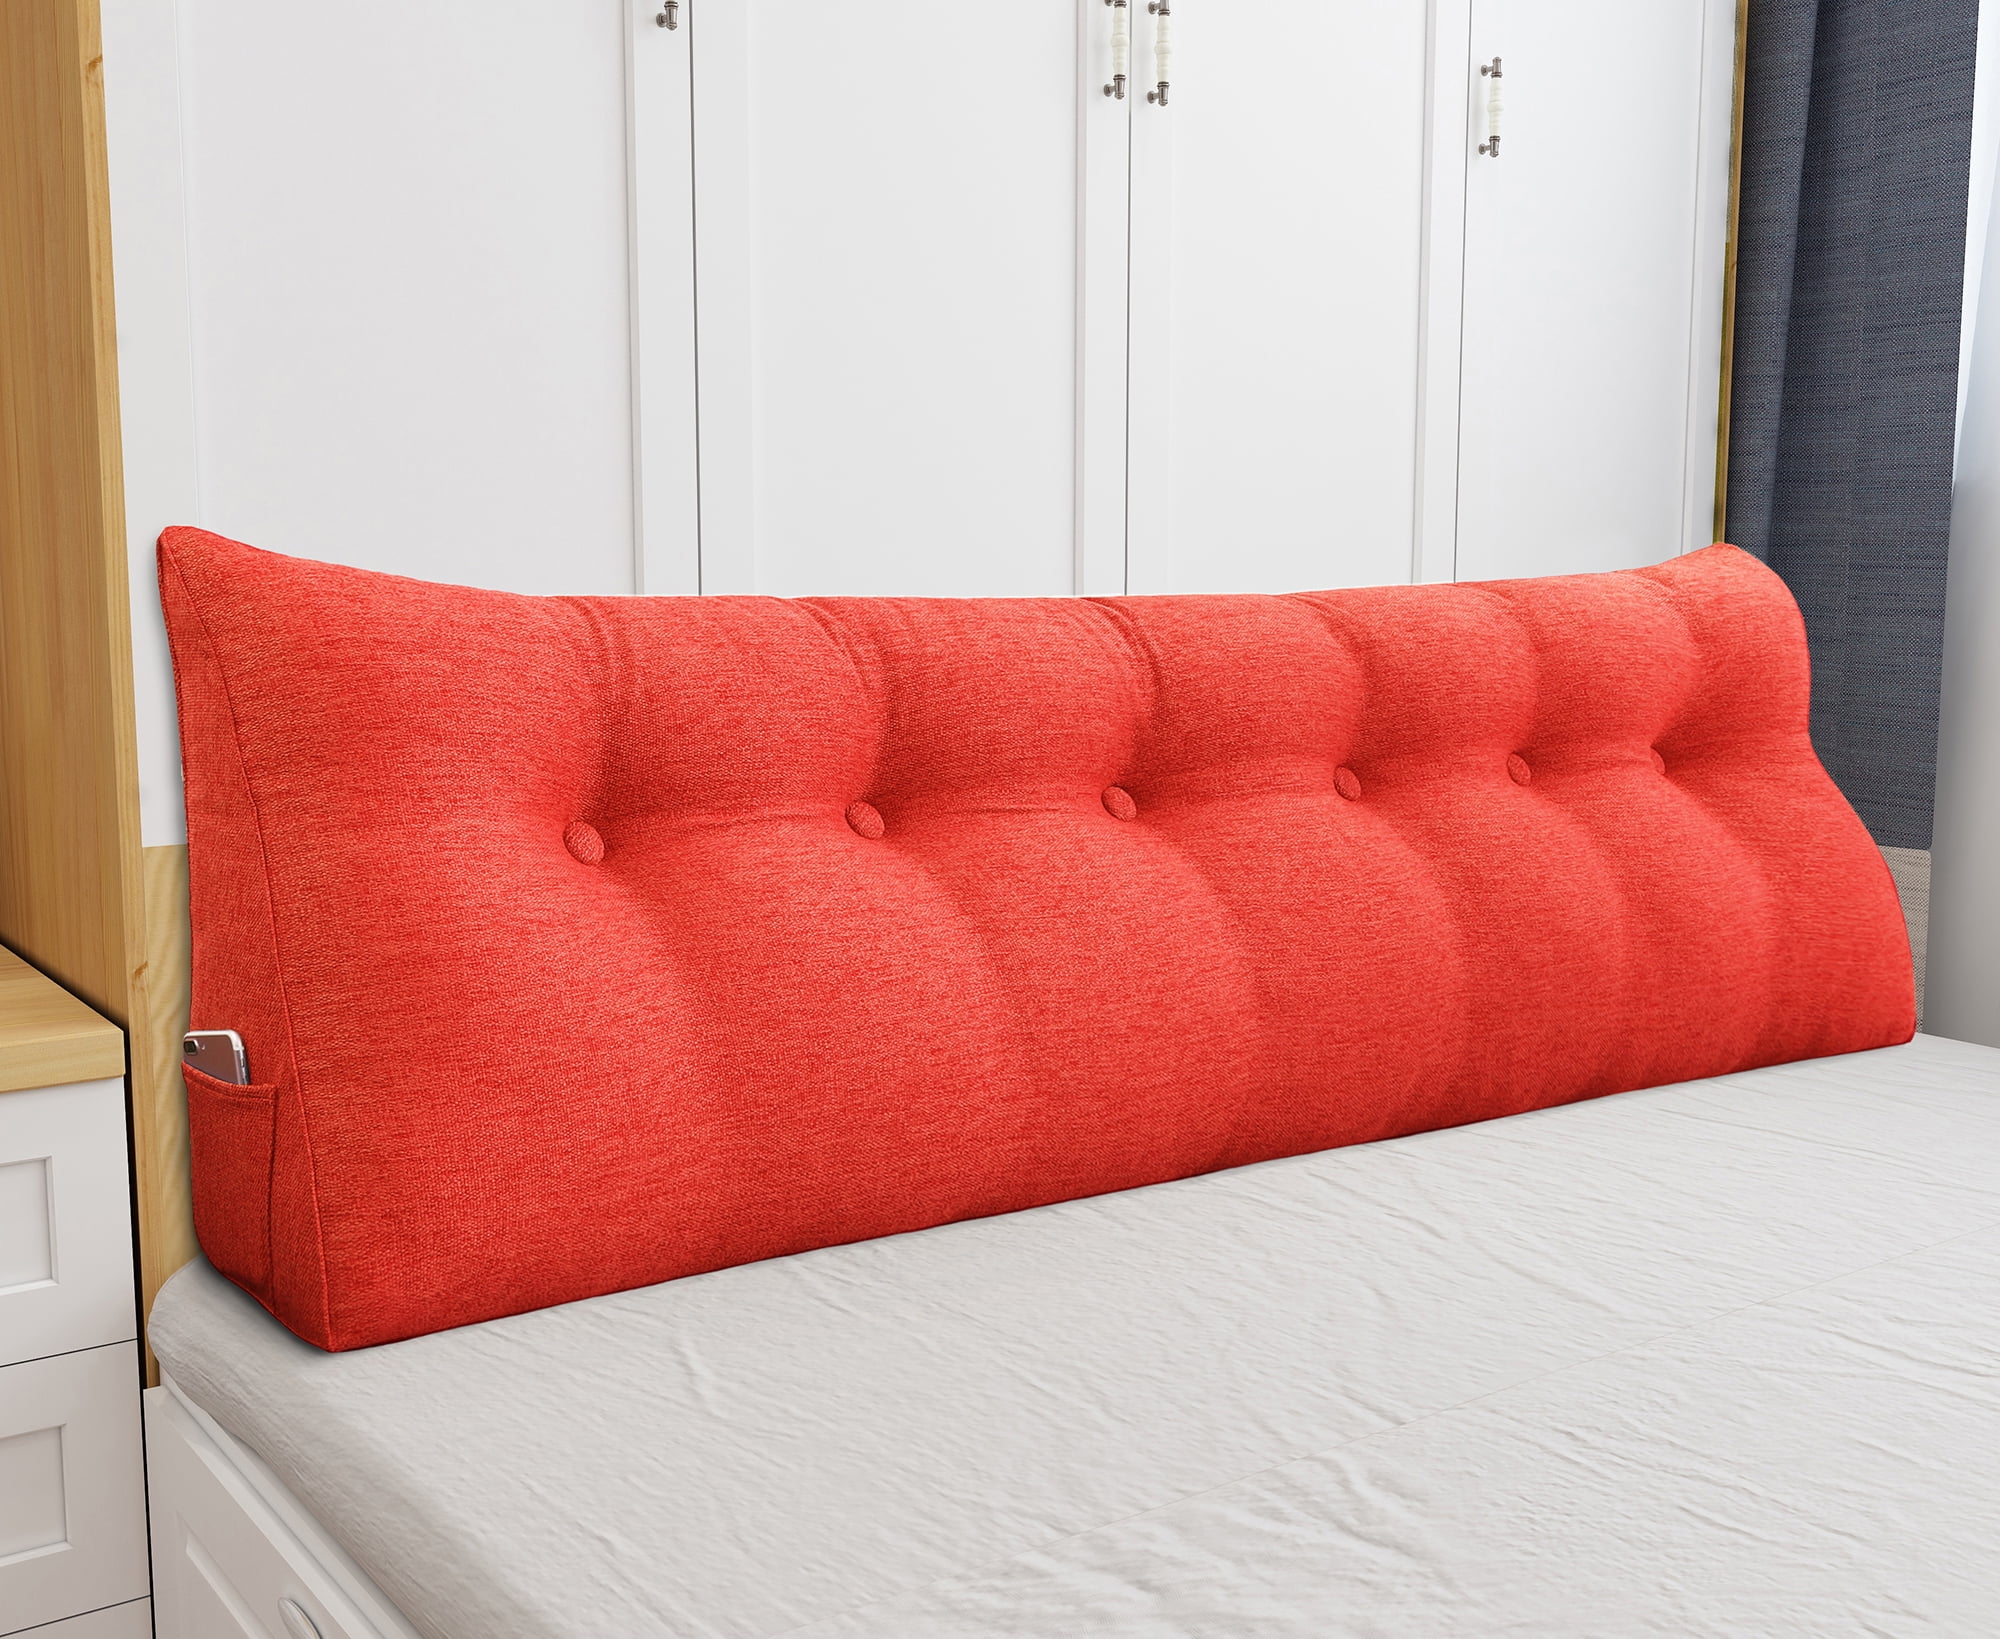 sofa bed triangular wedge cushion